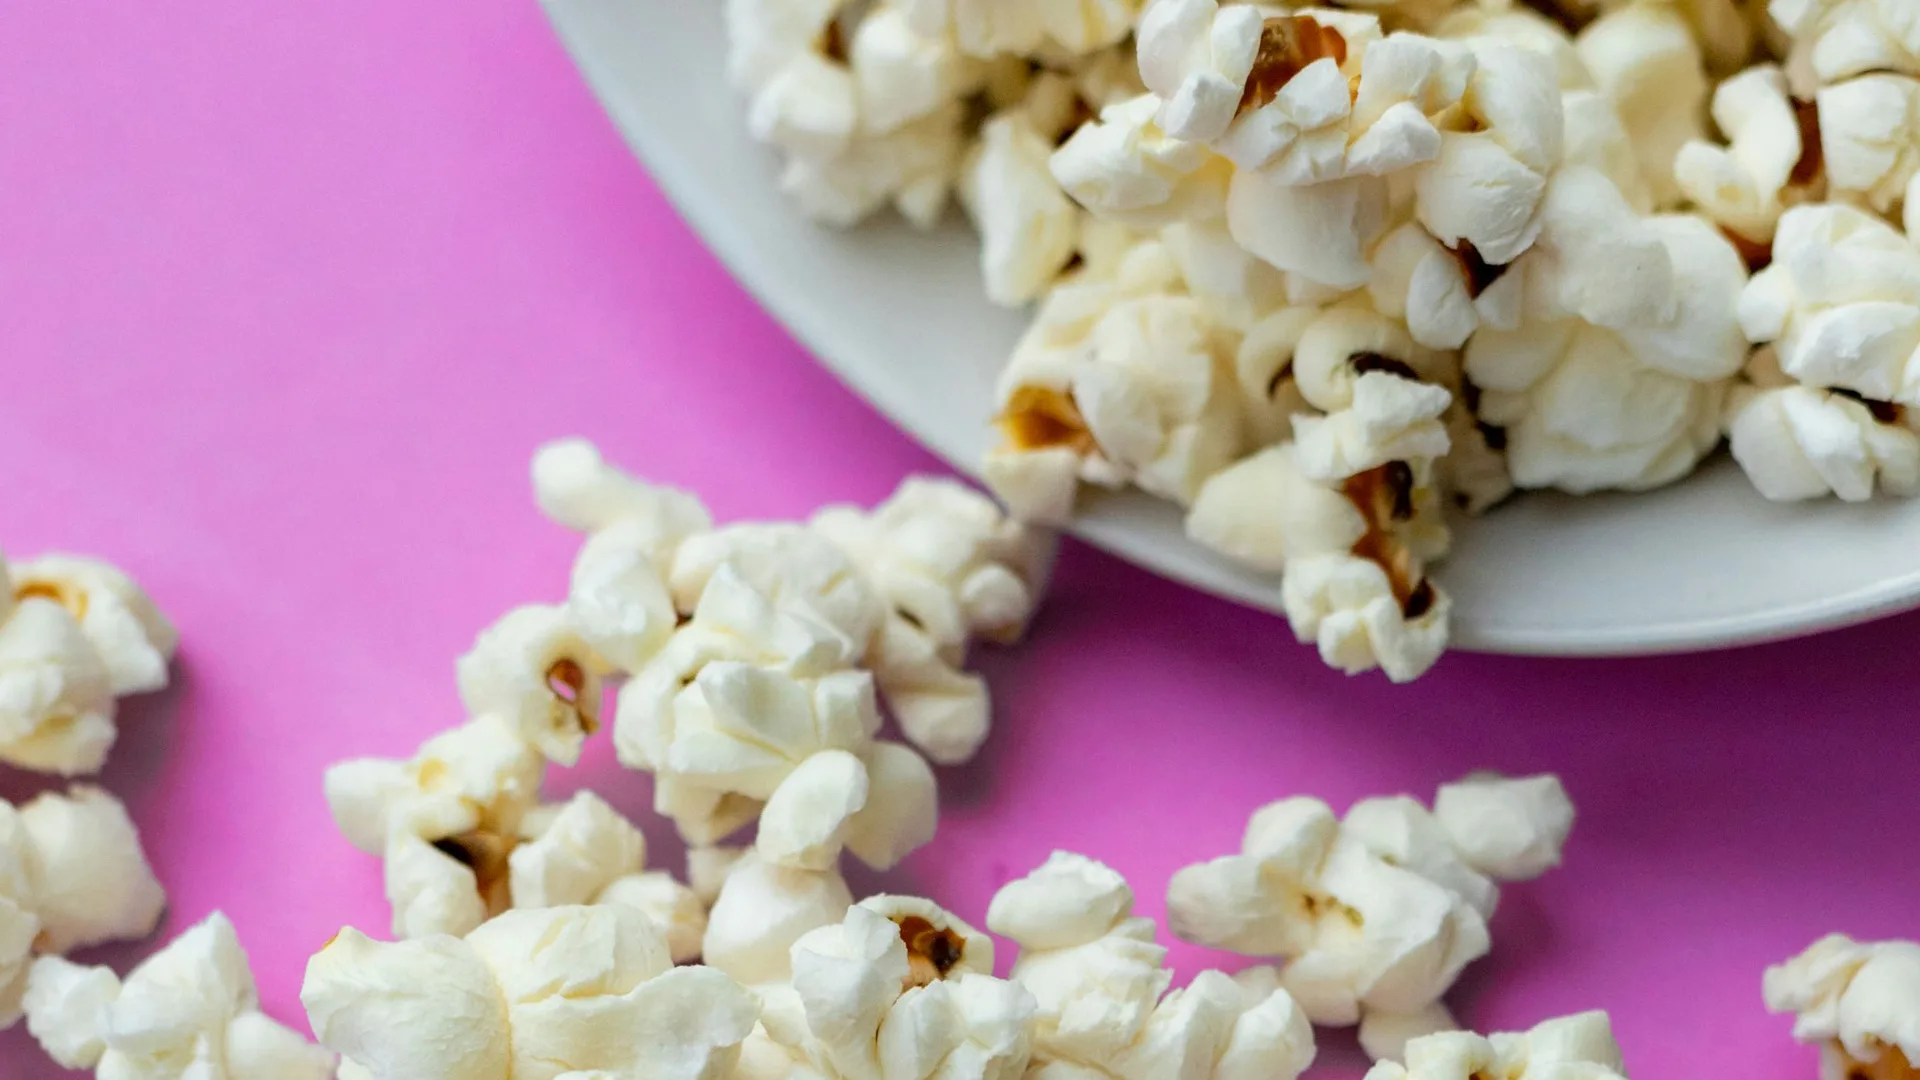 Close up photograph of popcorn